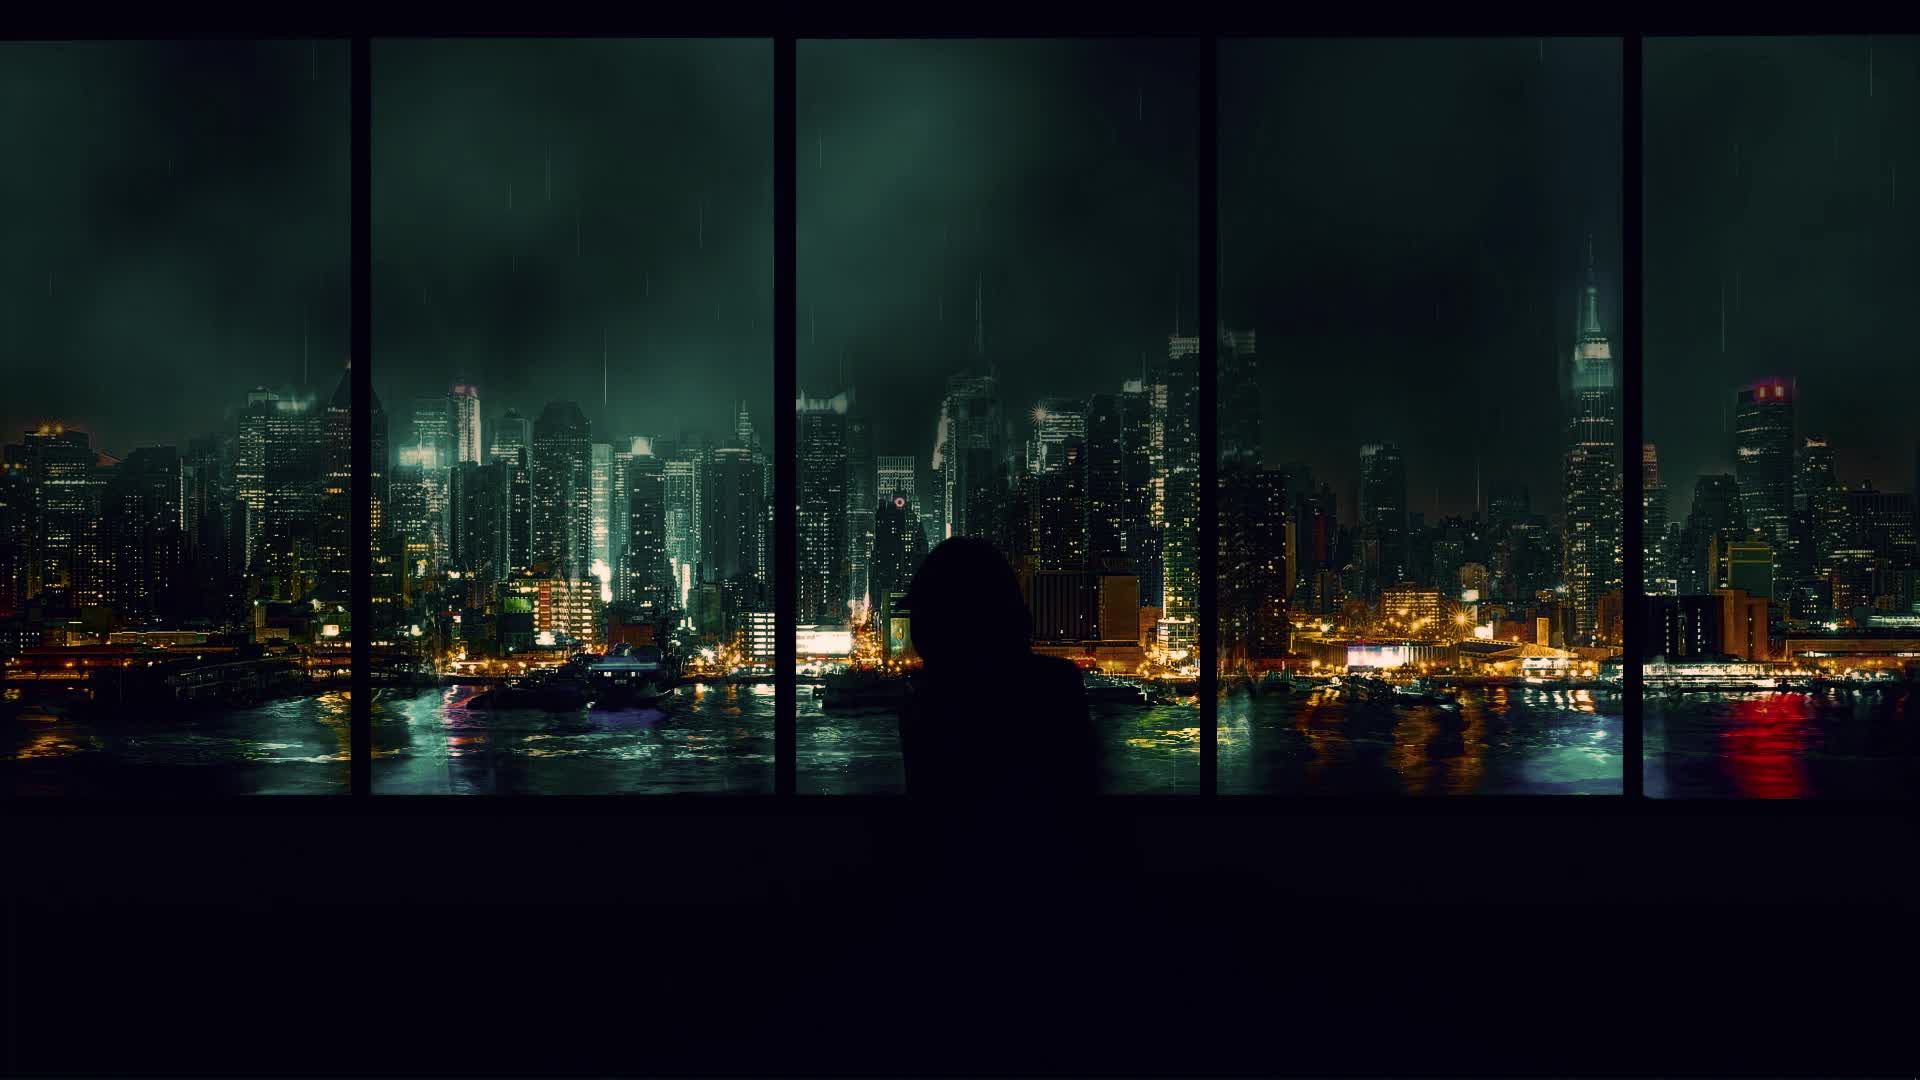 City Night Lights Live Wallpaper - free download